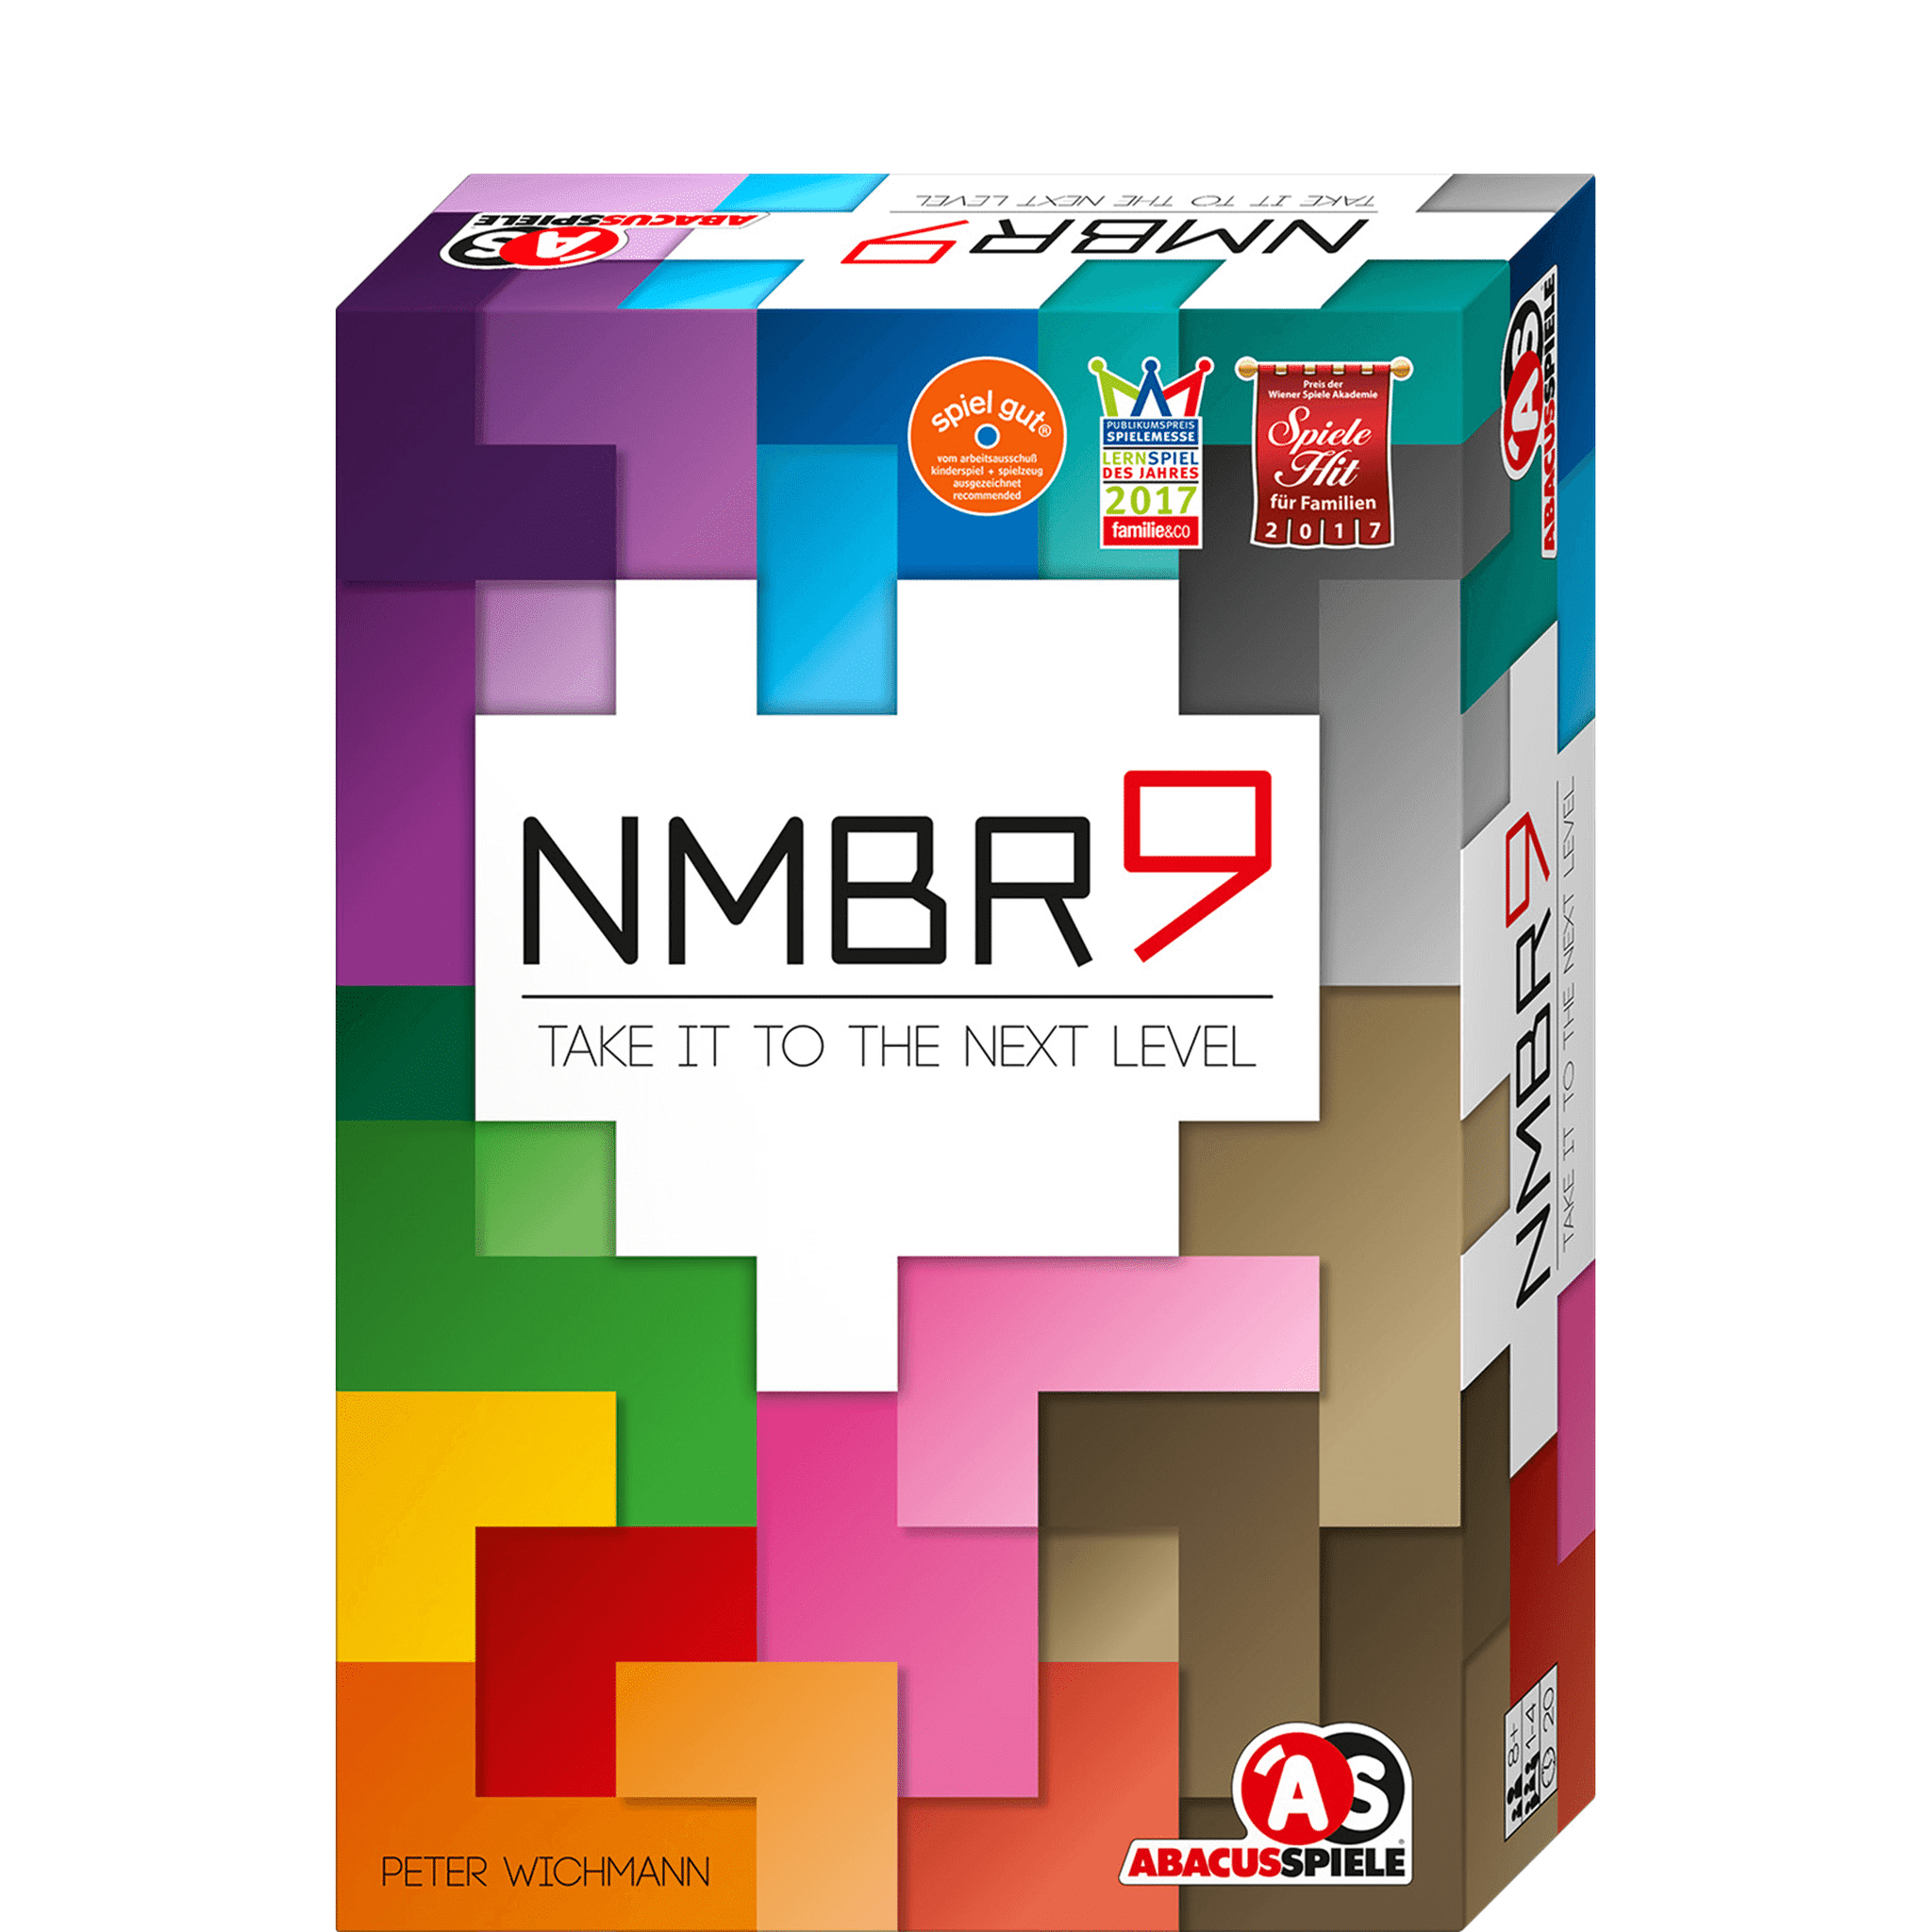 Gra NMBR 9 (edycja europejska)